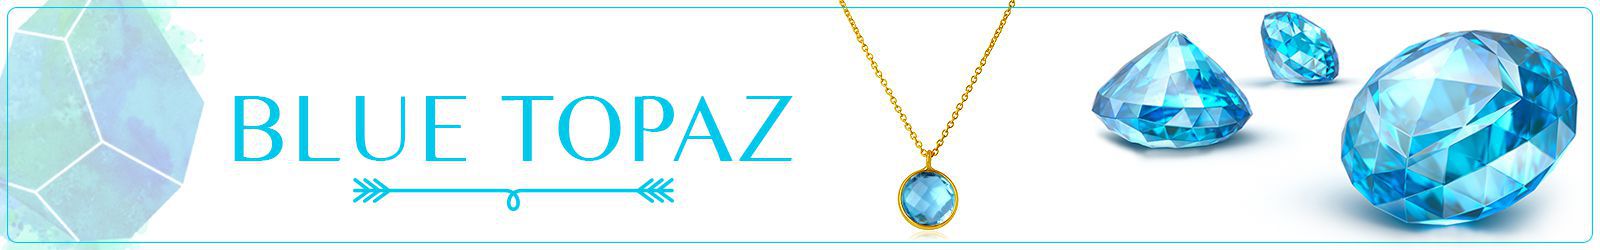 Silver Blue Topaz Jewelry Wholesale Supplier